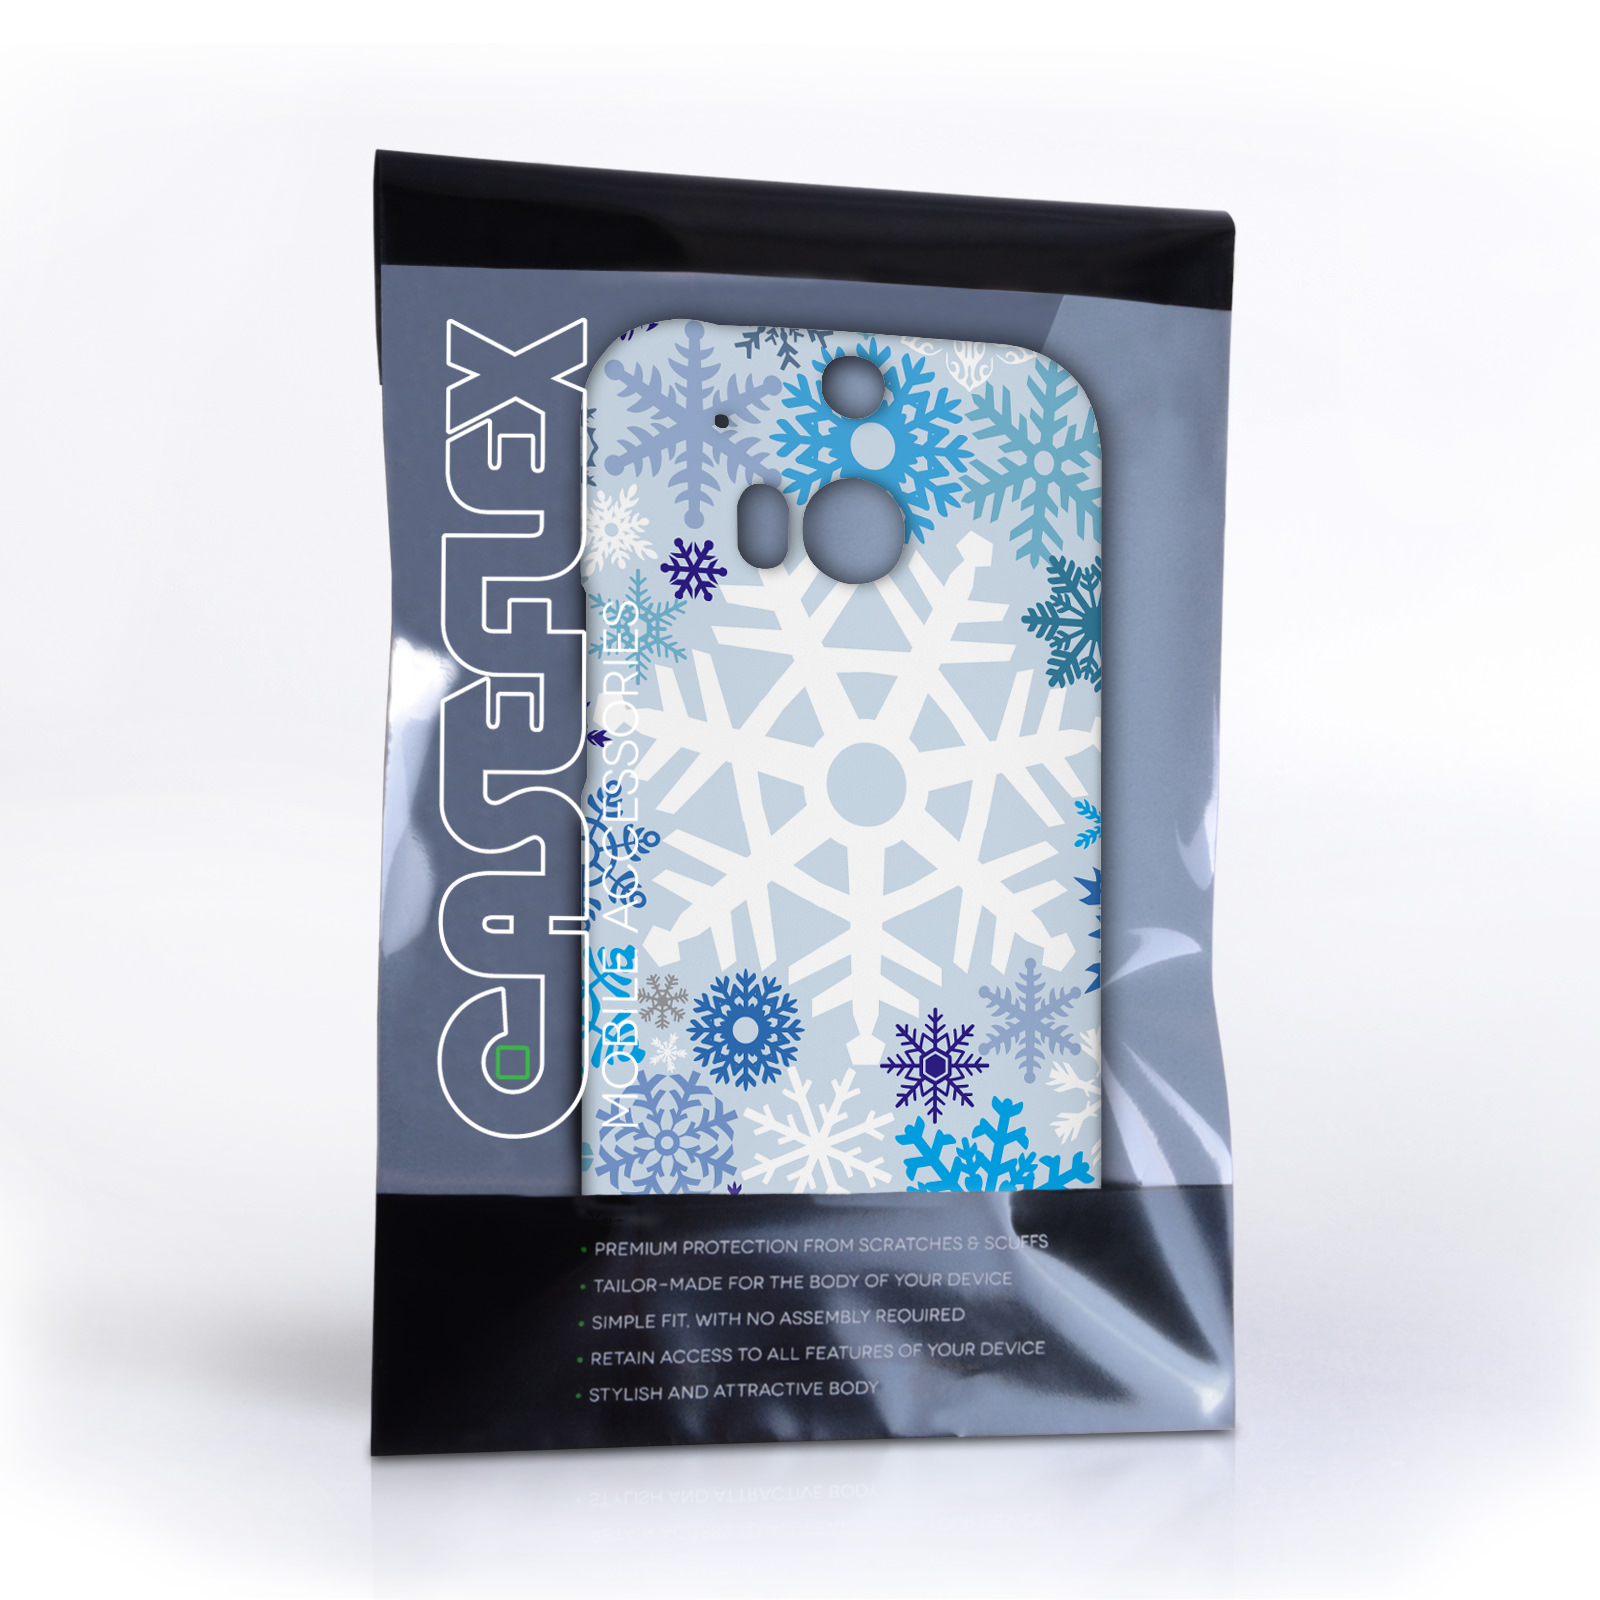 Caseflex HTC One M8 Winter Christmas Snowflake Hard Case - White / Blue